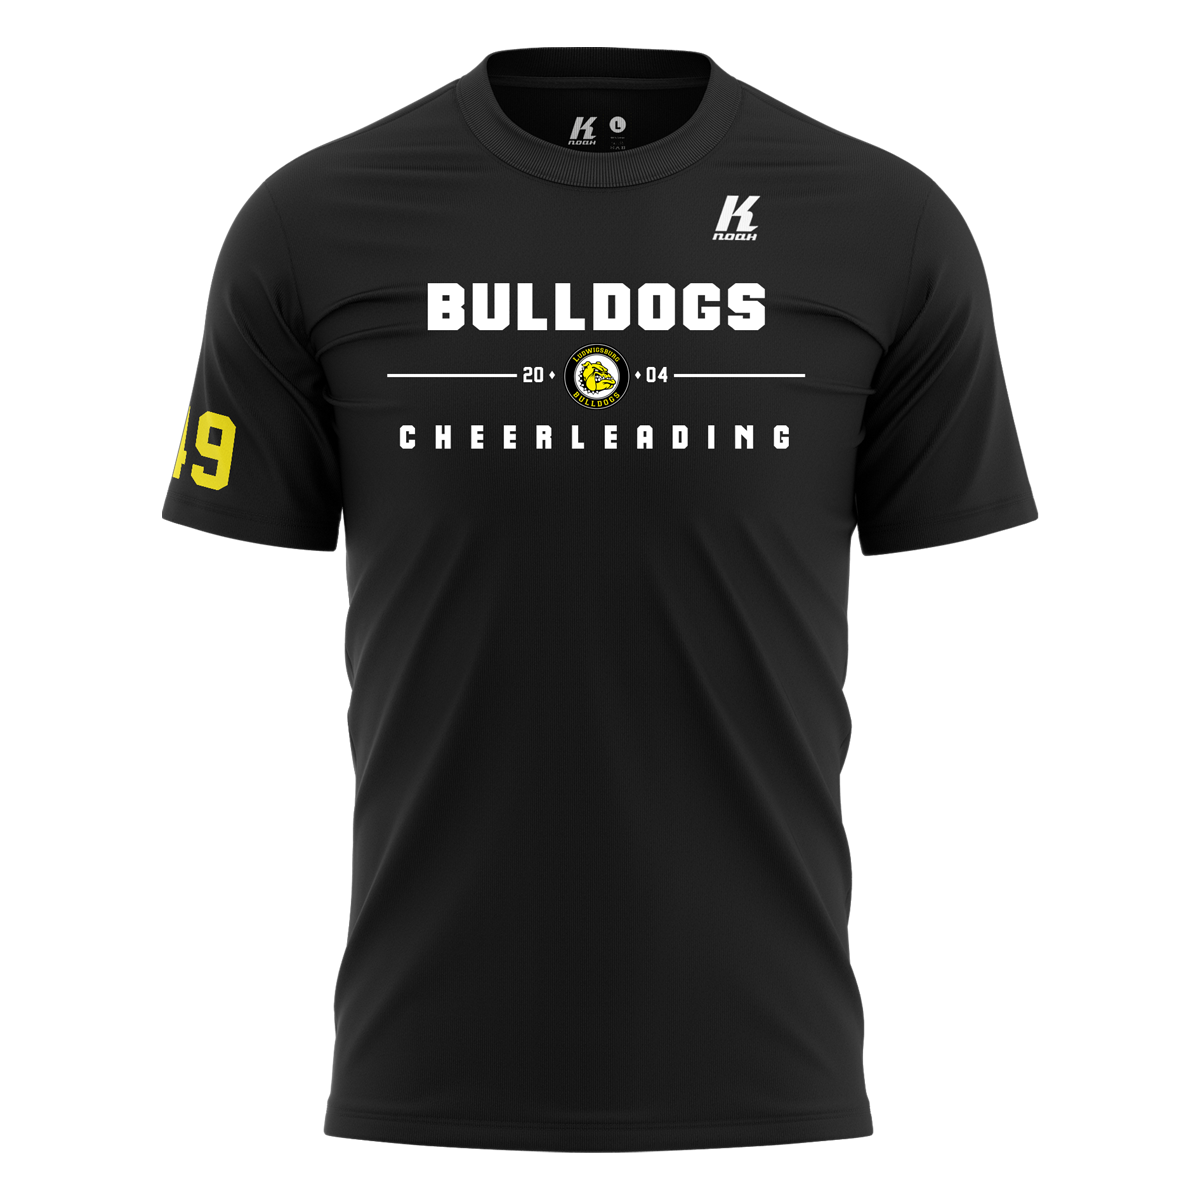 LB-Bulldogs Cheerleader Wordmark Tee black 190g. ST222 with Playernumber/Initials